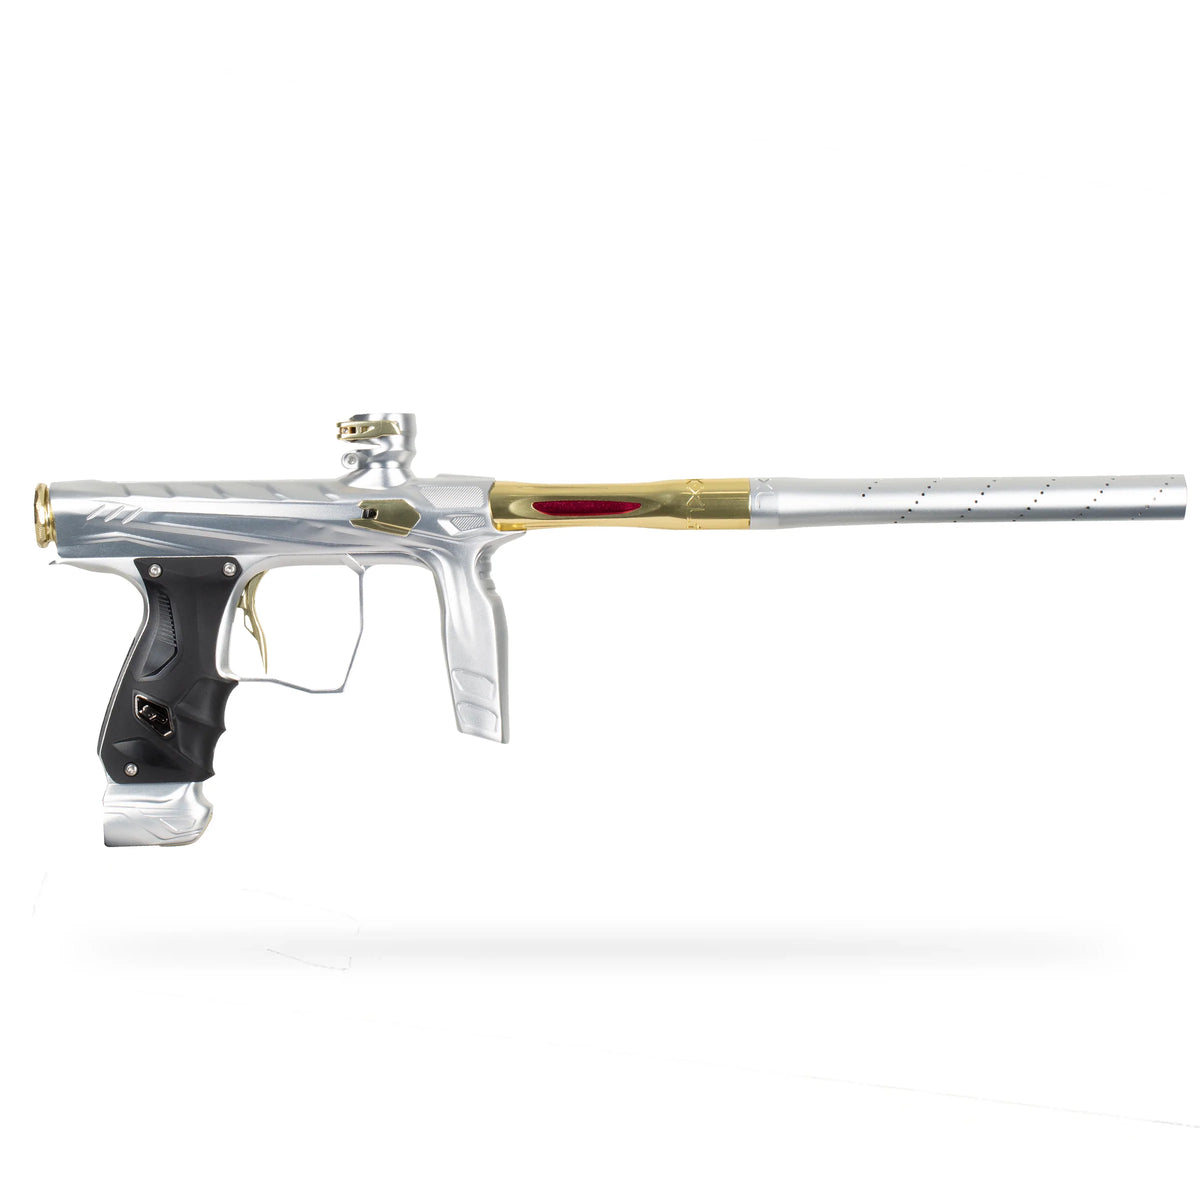 Planet Eclipse Ego LV2 Paintball Gun - Teal/Bronze